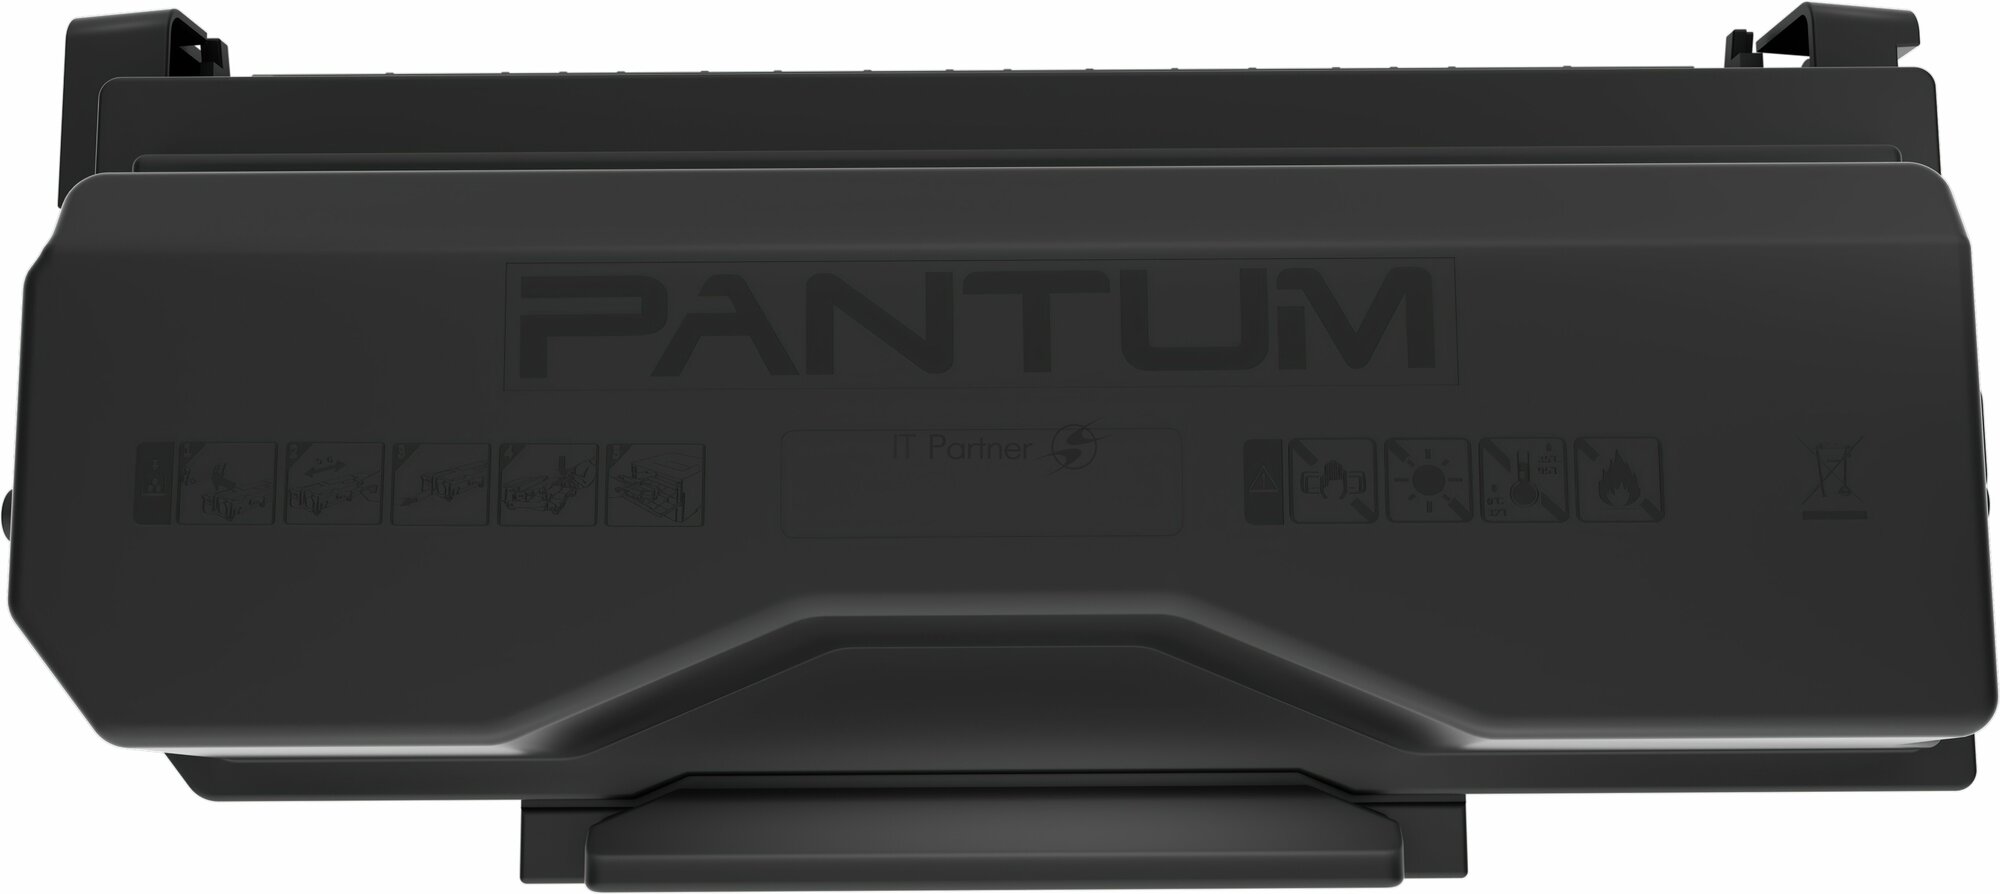 Картридж Pantum TL-5120X для Pantum BP5100DN, BP5100DW, BM5100ADW, BM5100ADN, 15000 стр, черный - фотография № 15